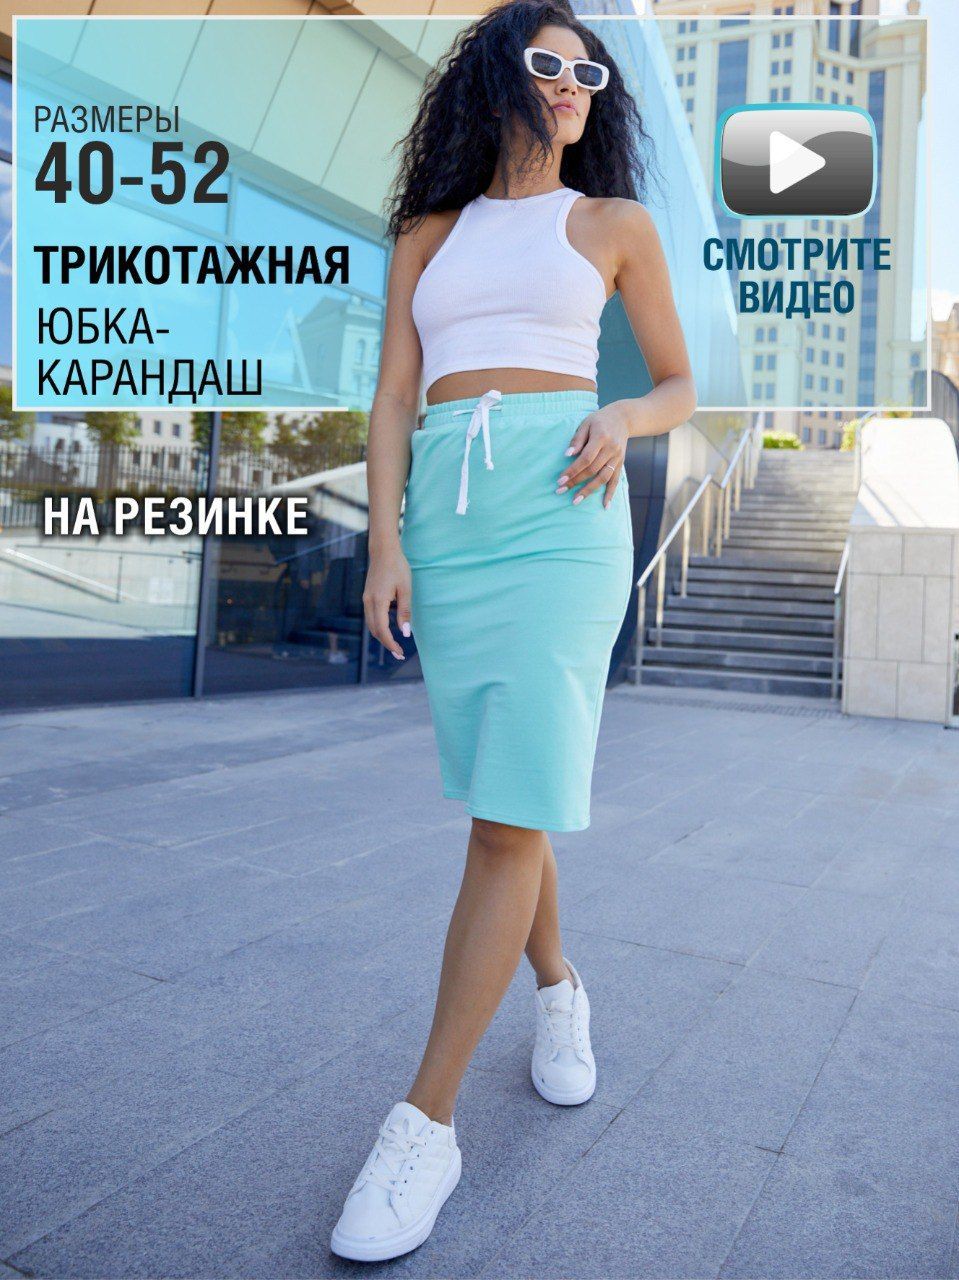 Как сшить трикотажную юбку-карандаш без выкройки за 30 минут: мастер-класс + видео — natali-fashion.ru